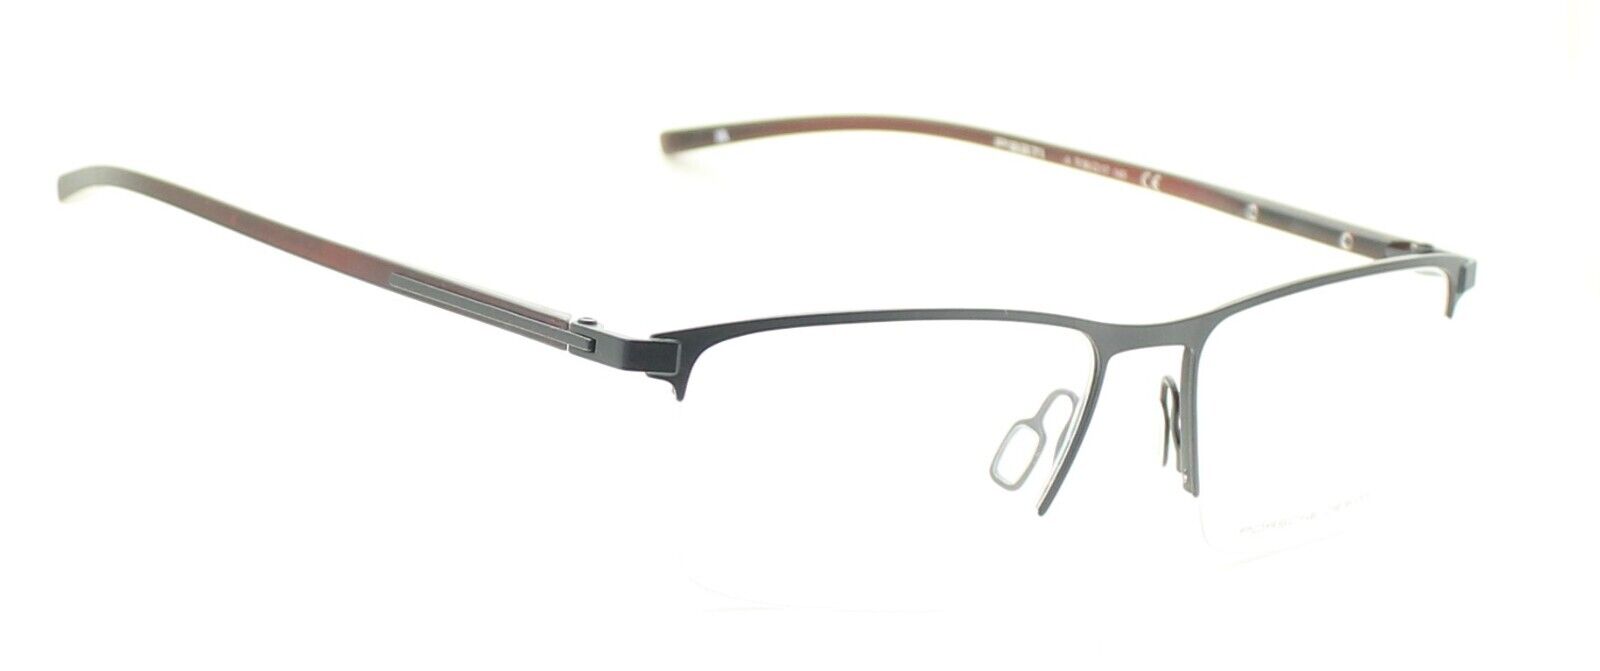 PORSCHE DESIGN P8371 A Eyewear RX Optical FRAMES Glasses Eyeglasses ...